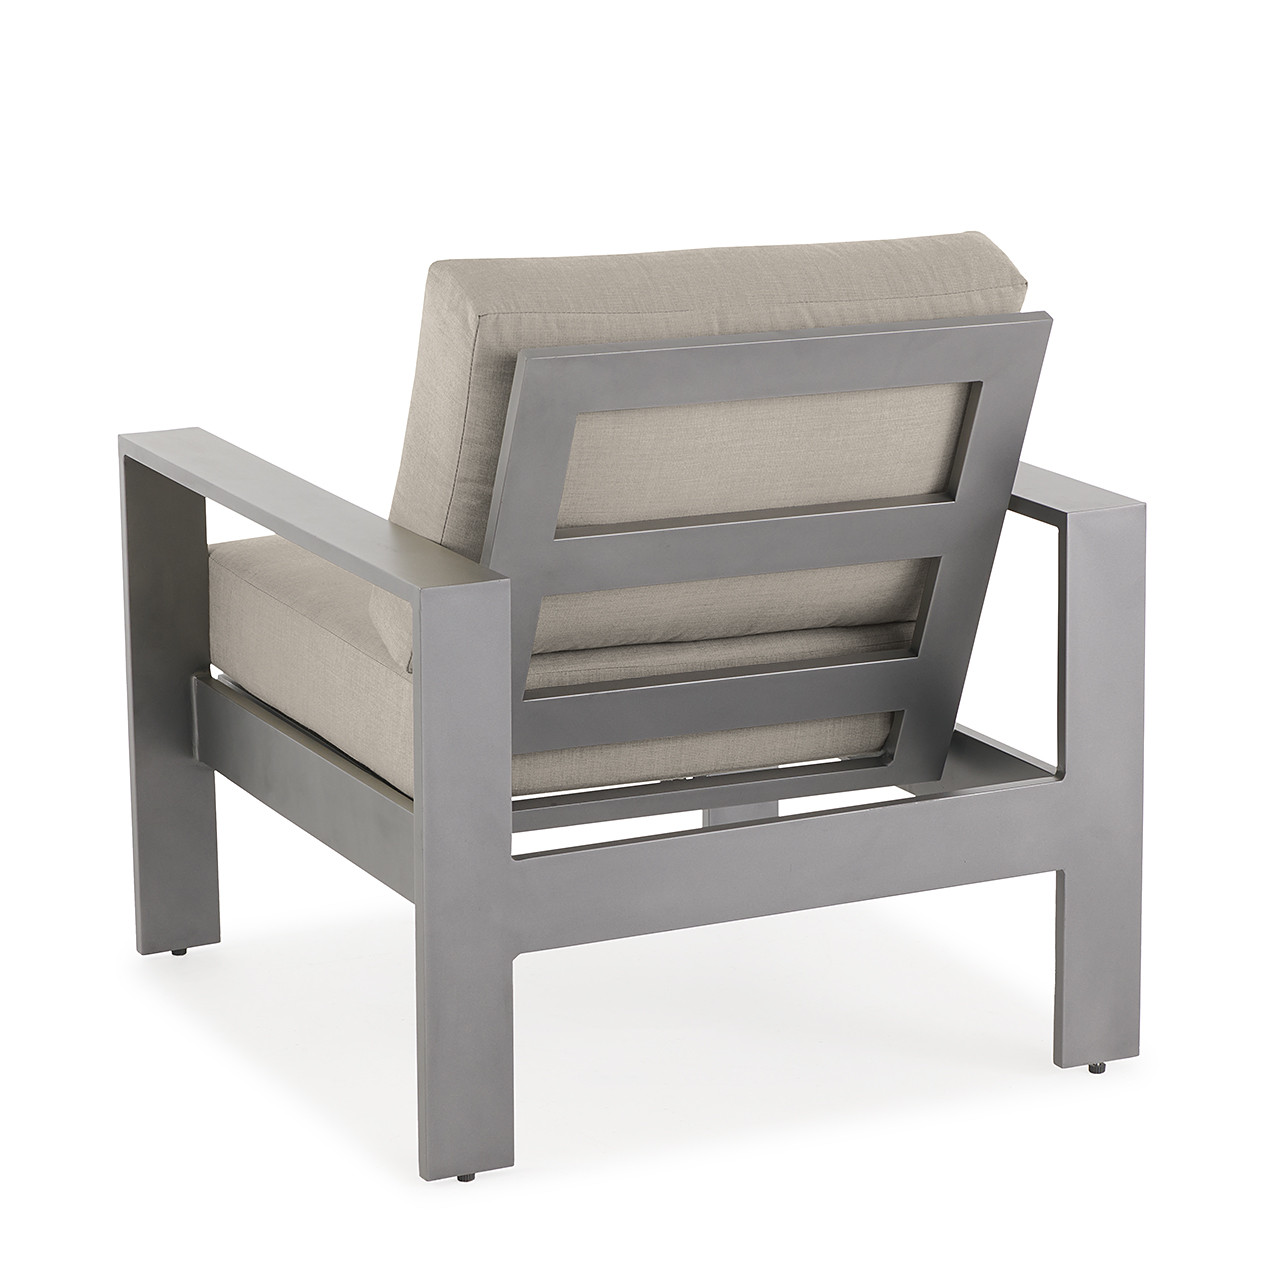 Soho Slate Grey Aluminum with Cushions 3 Piece Sofa Group + Club Chairs + 50 x 28 in. Coffee Table